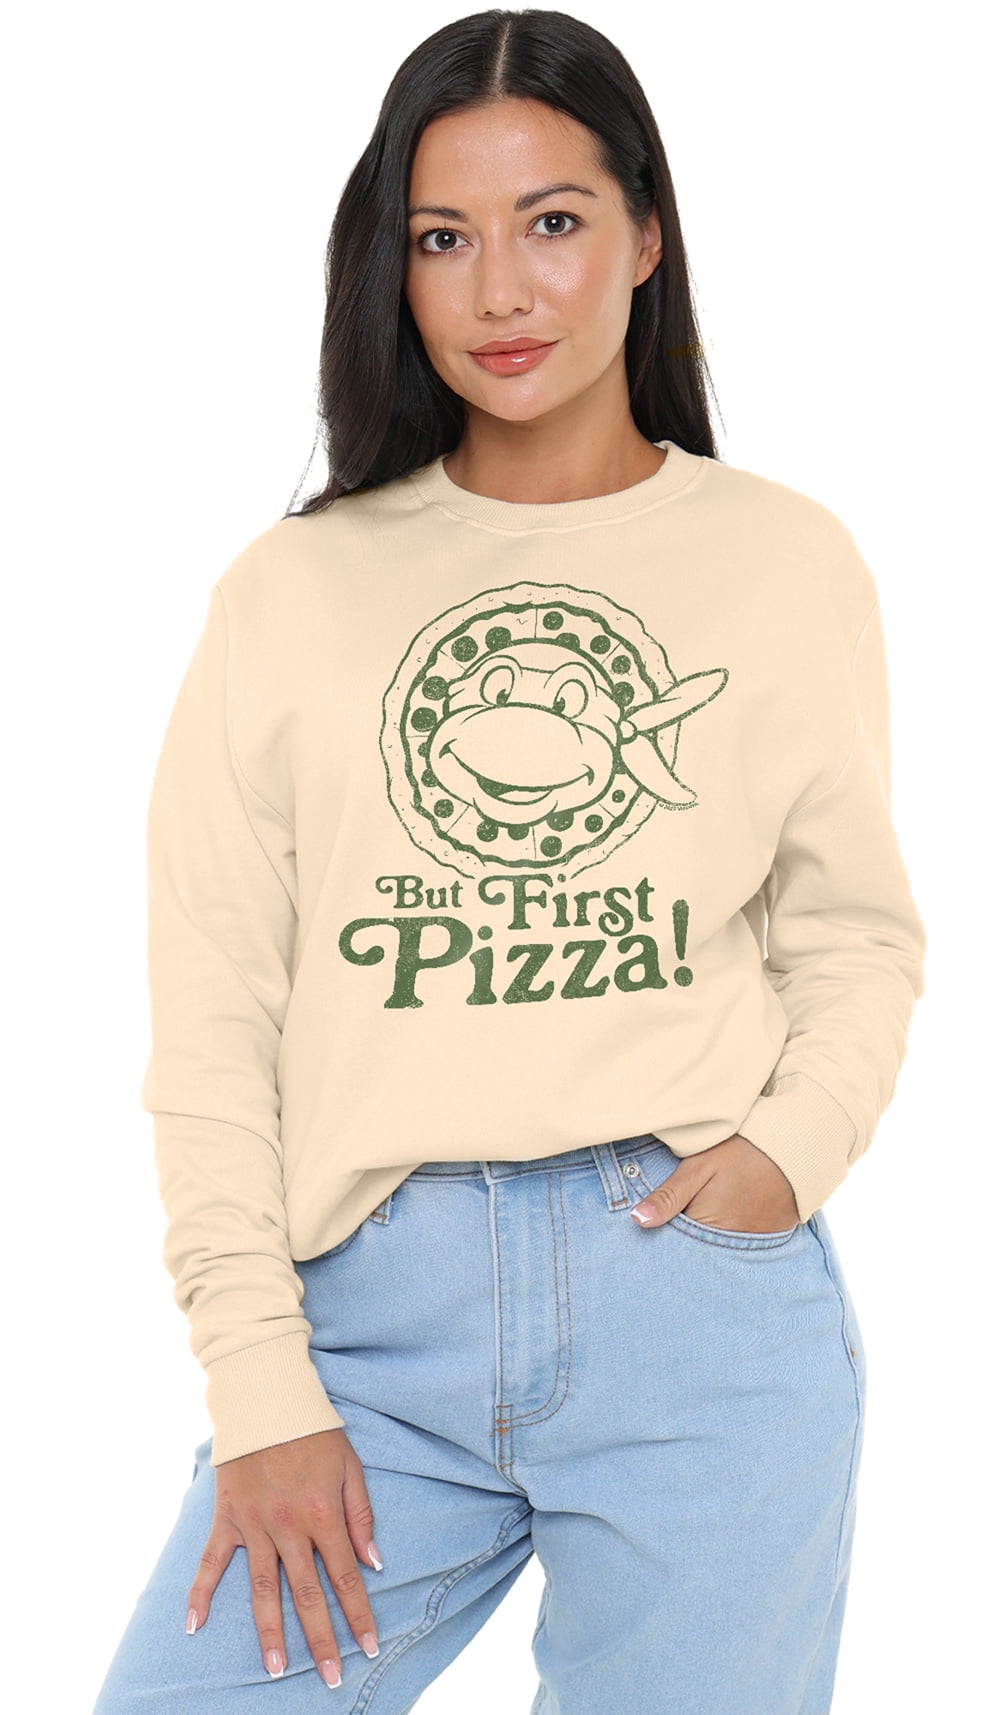 Teenage Mutant Ninja Turtles TMNT But First Pizza Women's Crew Sweatshirt